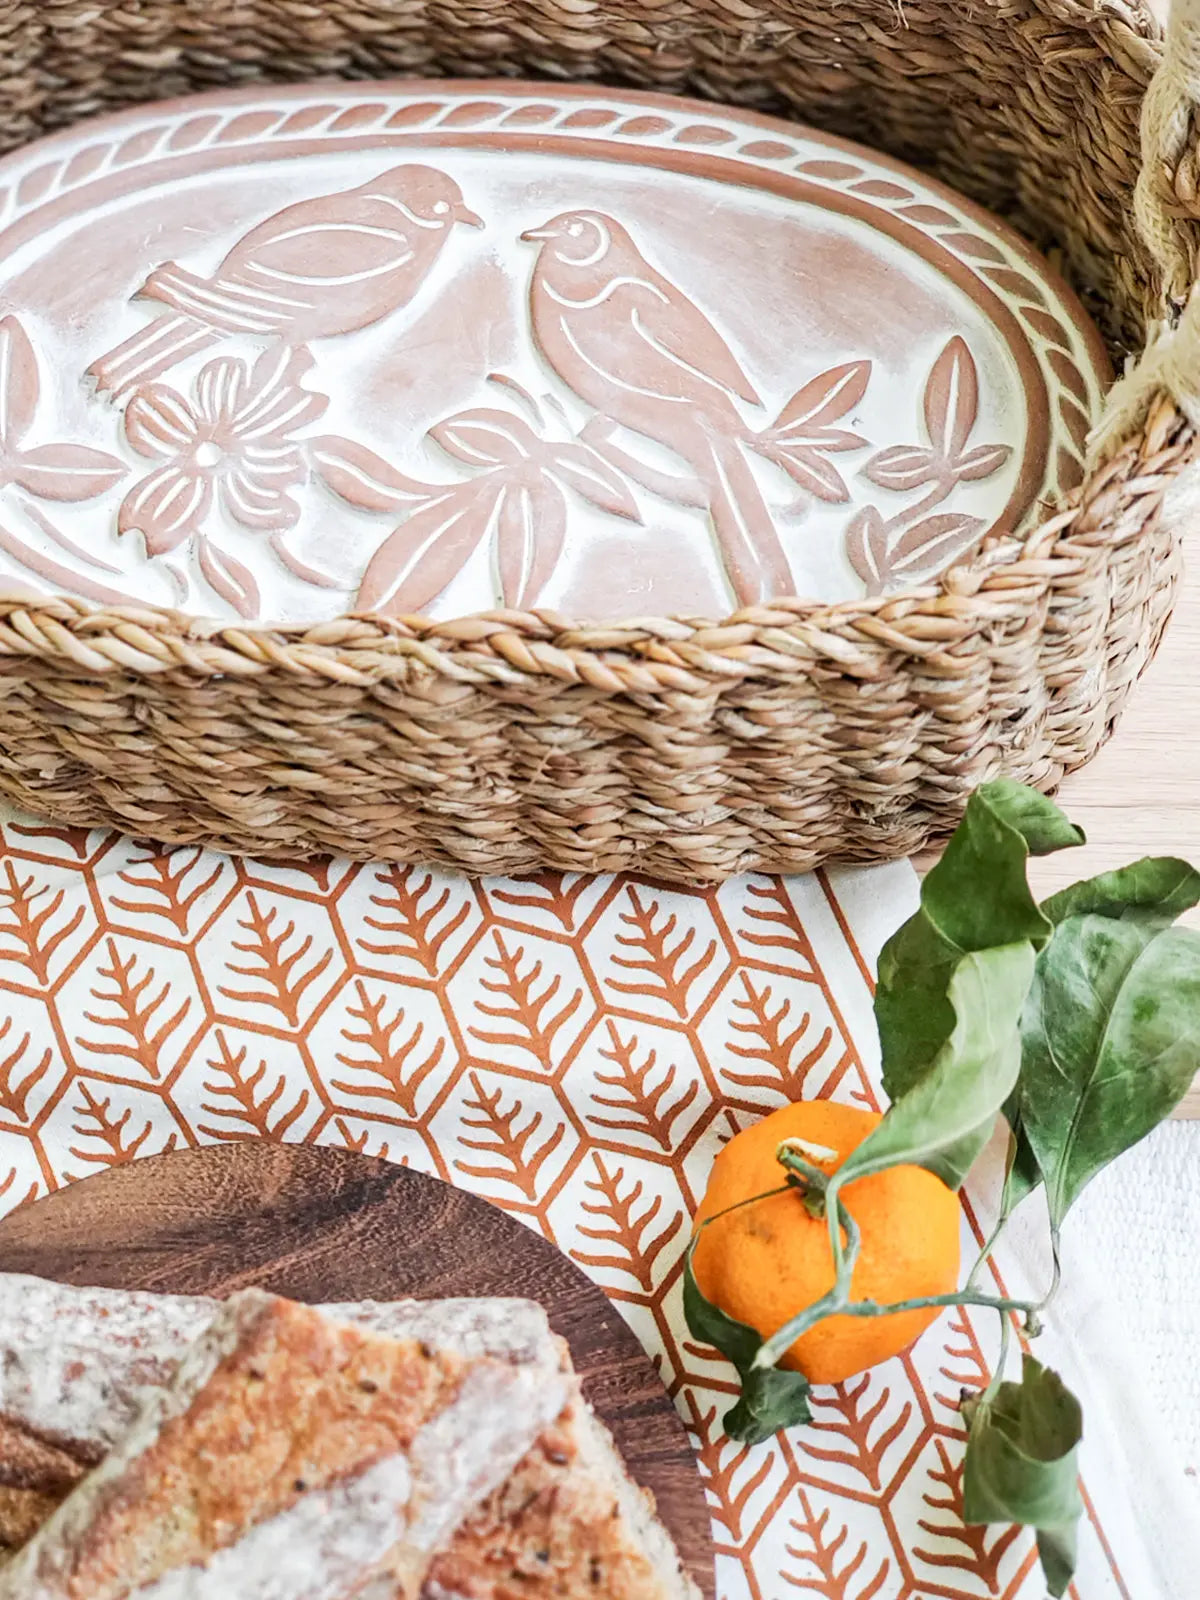 Bread Warmer & Basket Gift Set with Tea Towel - Lovebird Oval KORISSA